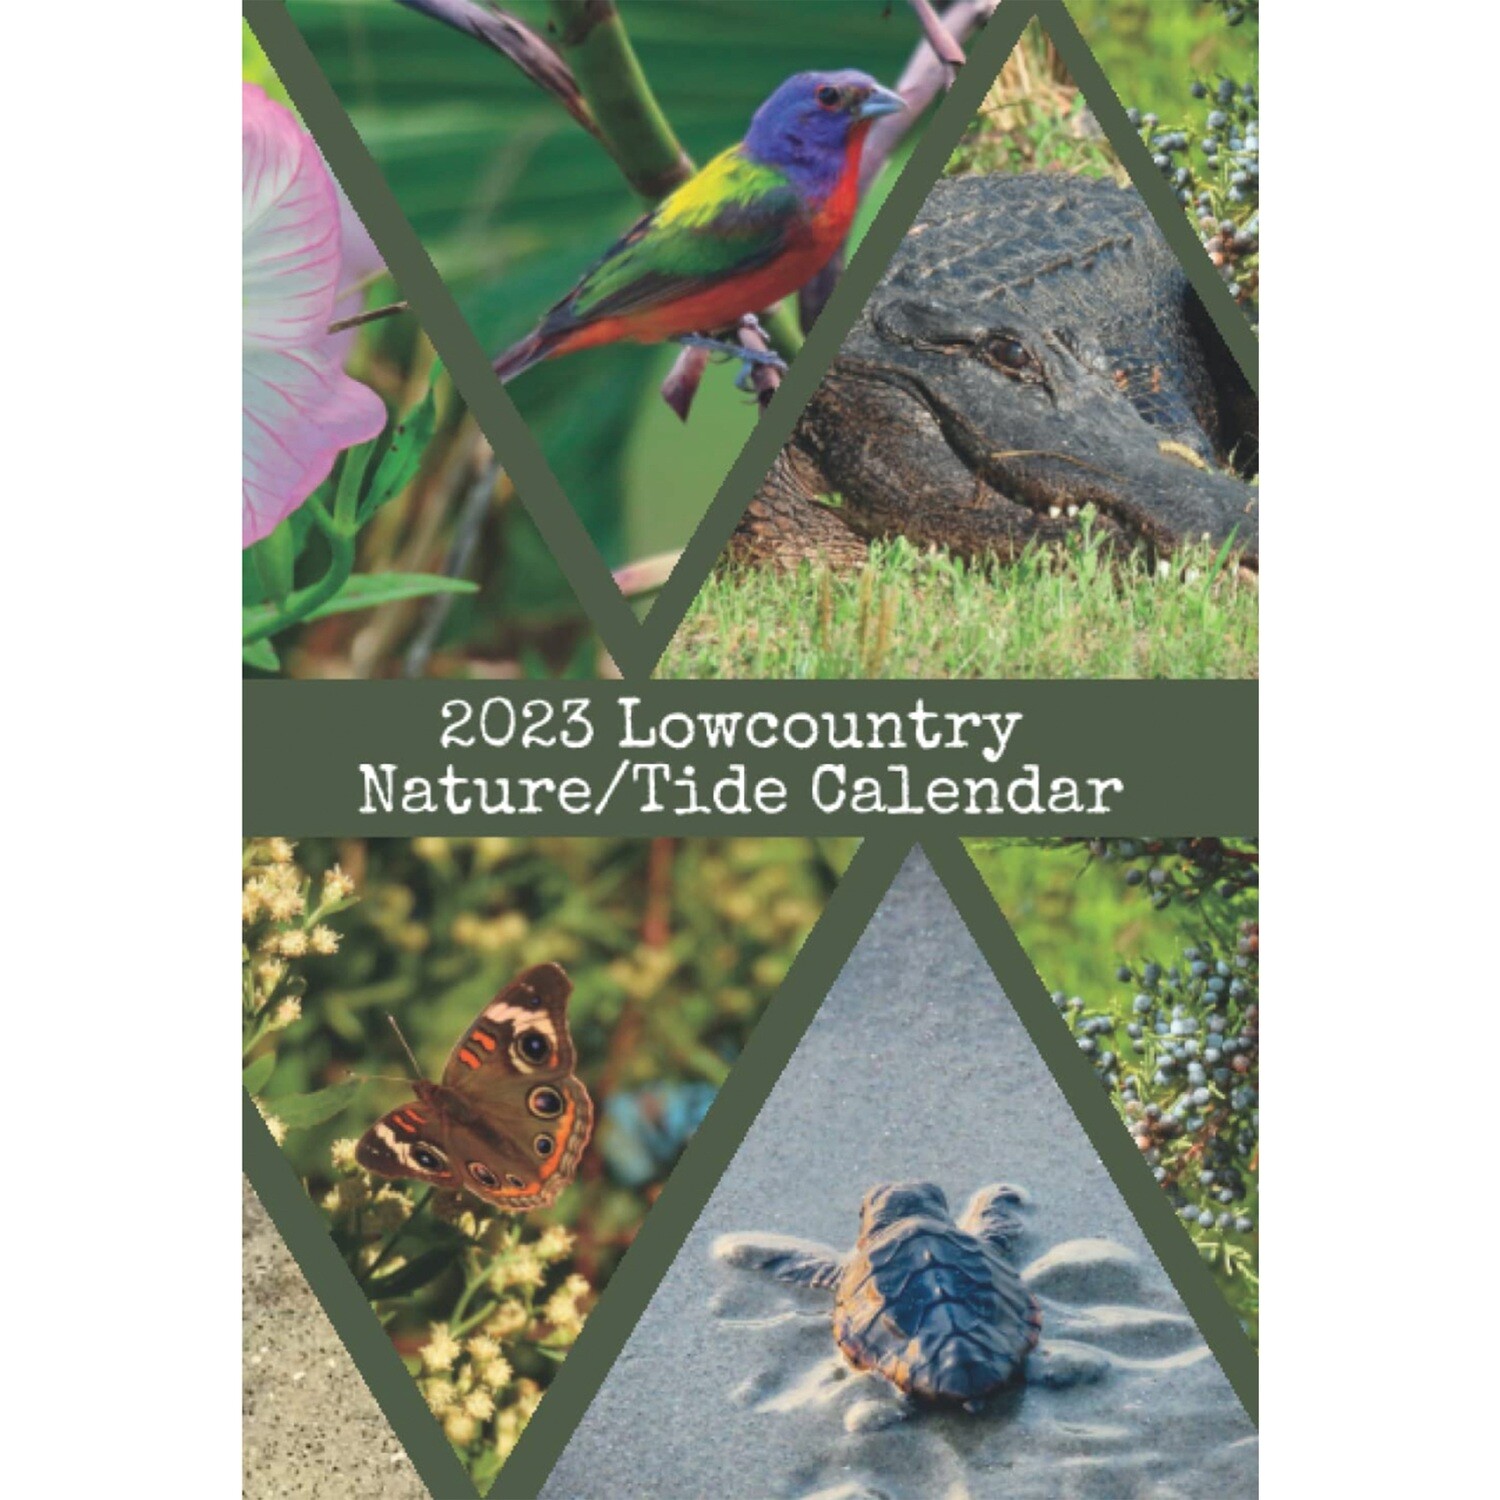 2023 Lowcountry Nature/Tide Calendar